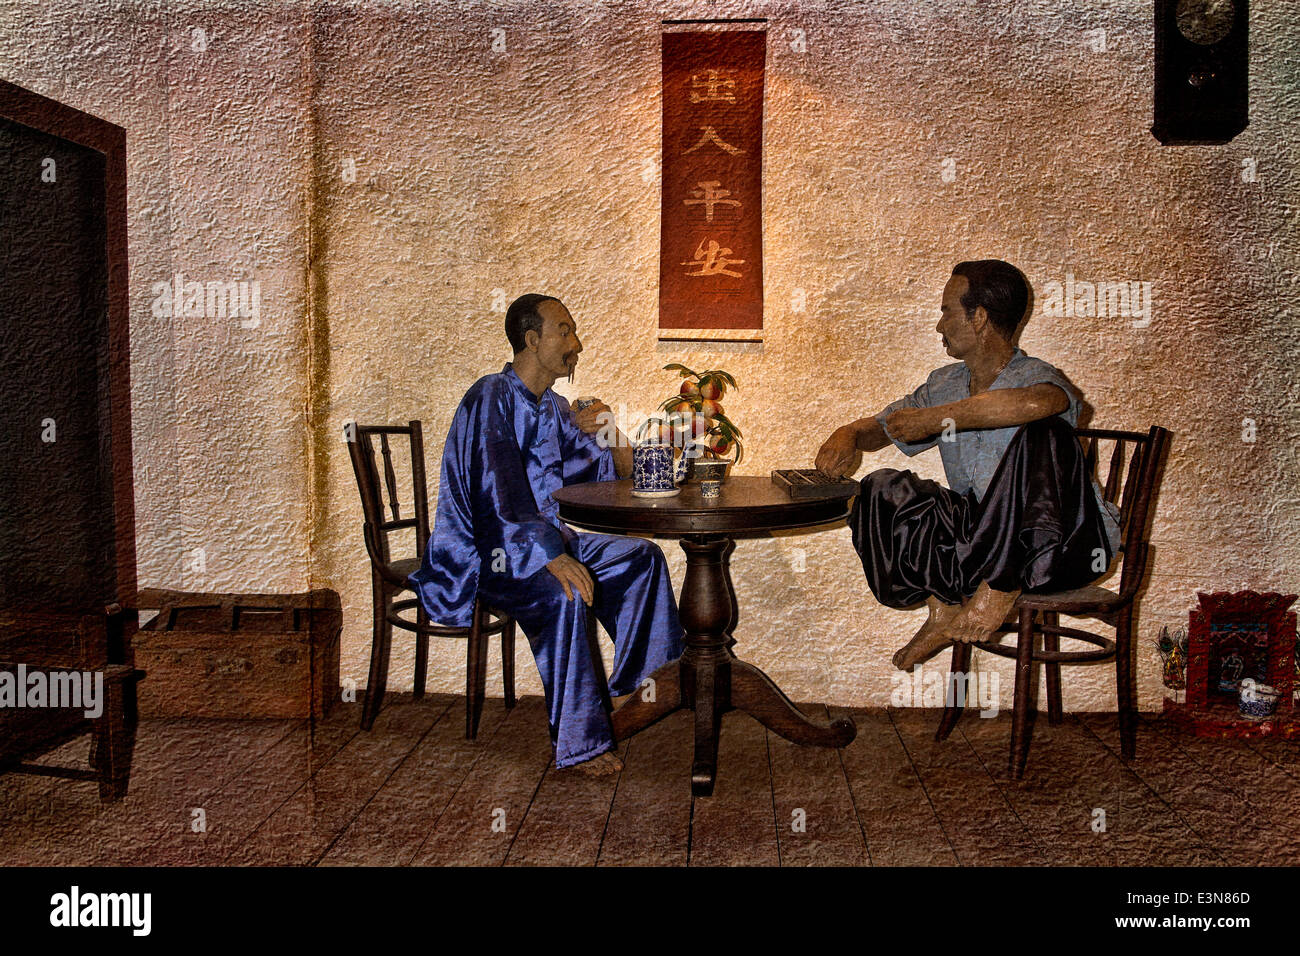 Casa da tè cinese. Immagine testurizzata, effetto pittorico e tela di figure cinesi in una sala da tè. Museo mostra Thailandia S. E. Asia Foto Stock